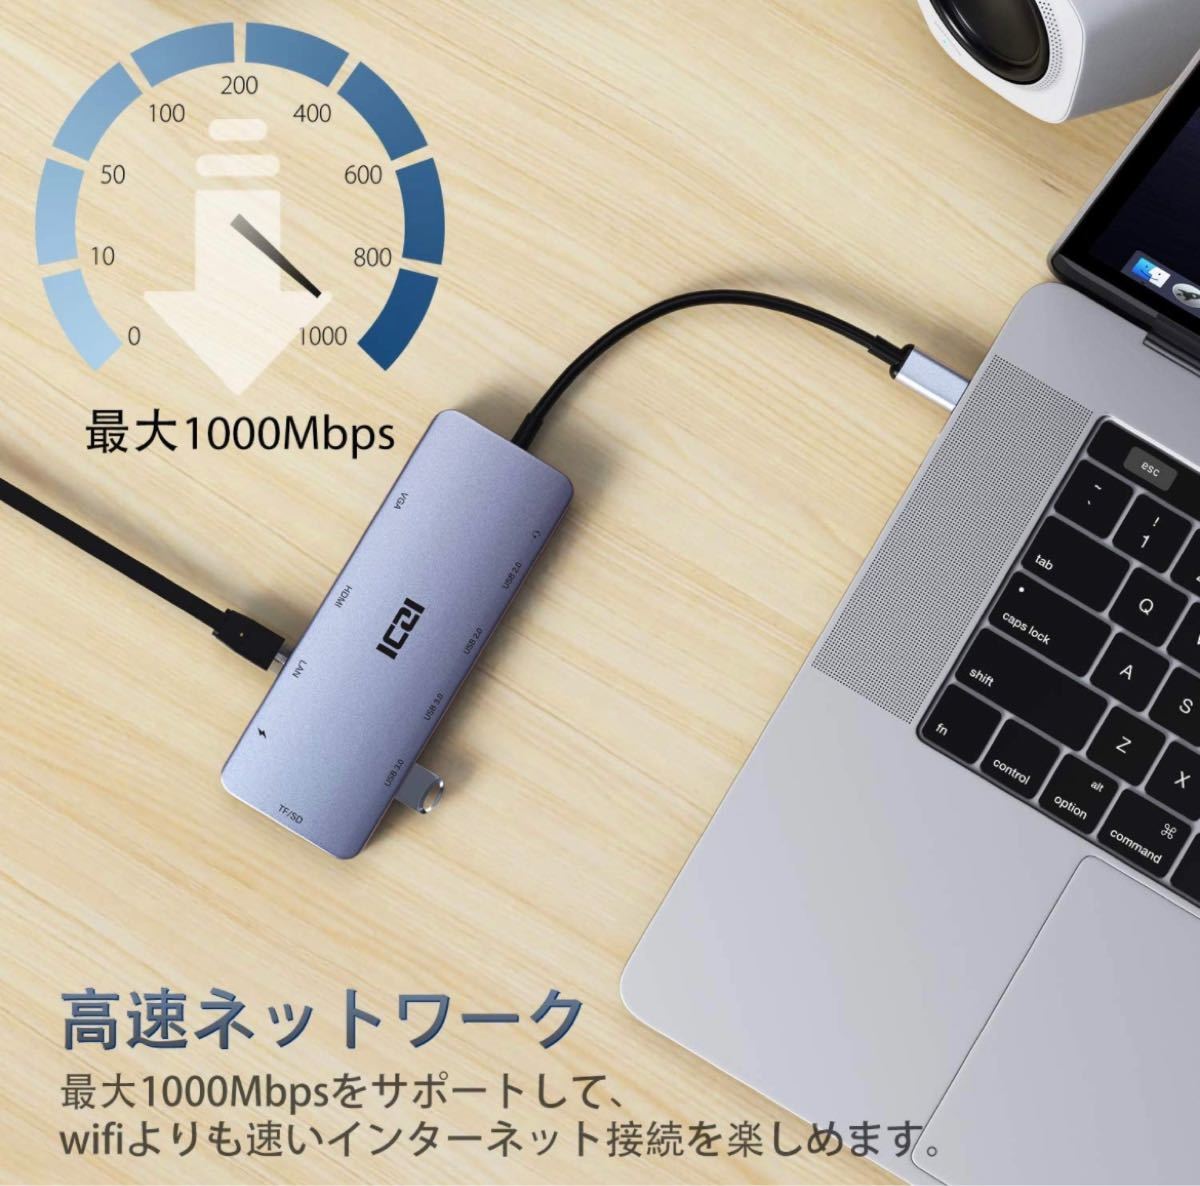 USB C ハブ 11in1 ドッキングステーション HDMI VGA LAN